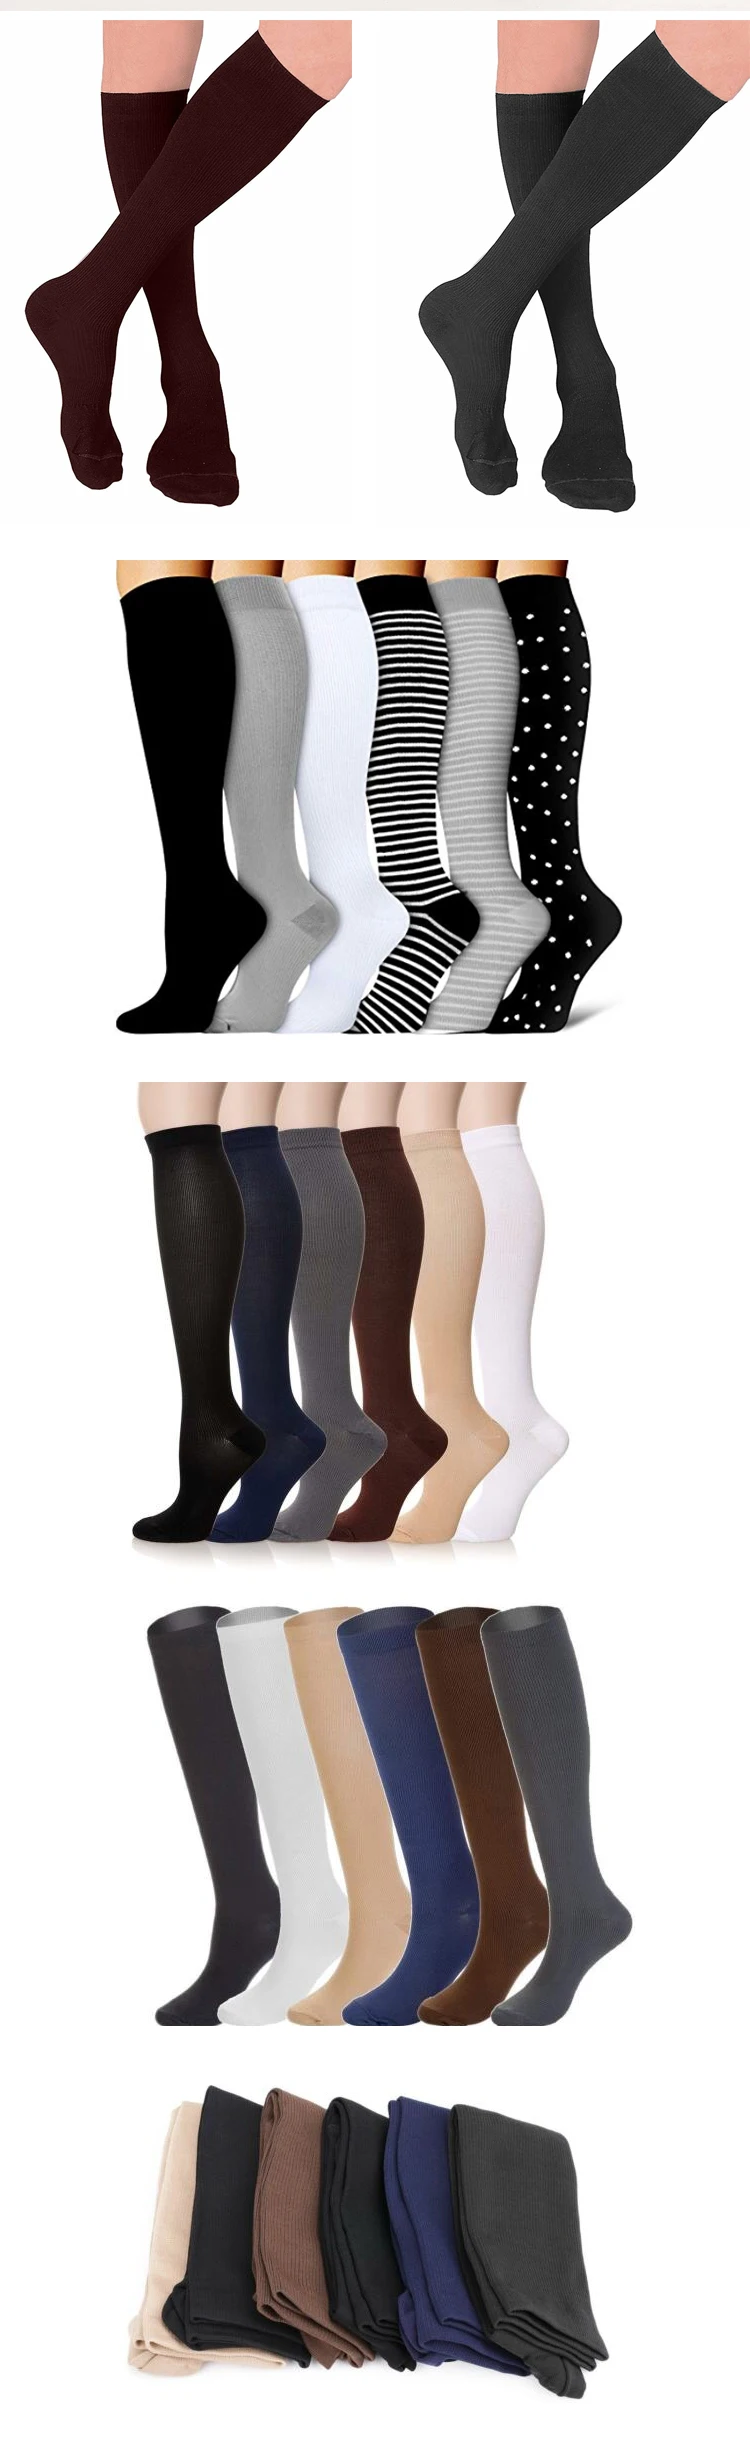 Enerup Logo Customized Nurse 8 Pack Copper Knee High Carthart Compression Running Socks Lithuania For Men & Women Hhmg